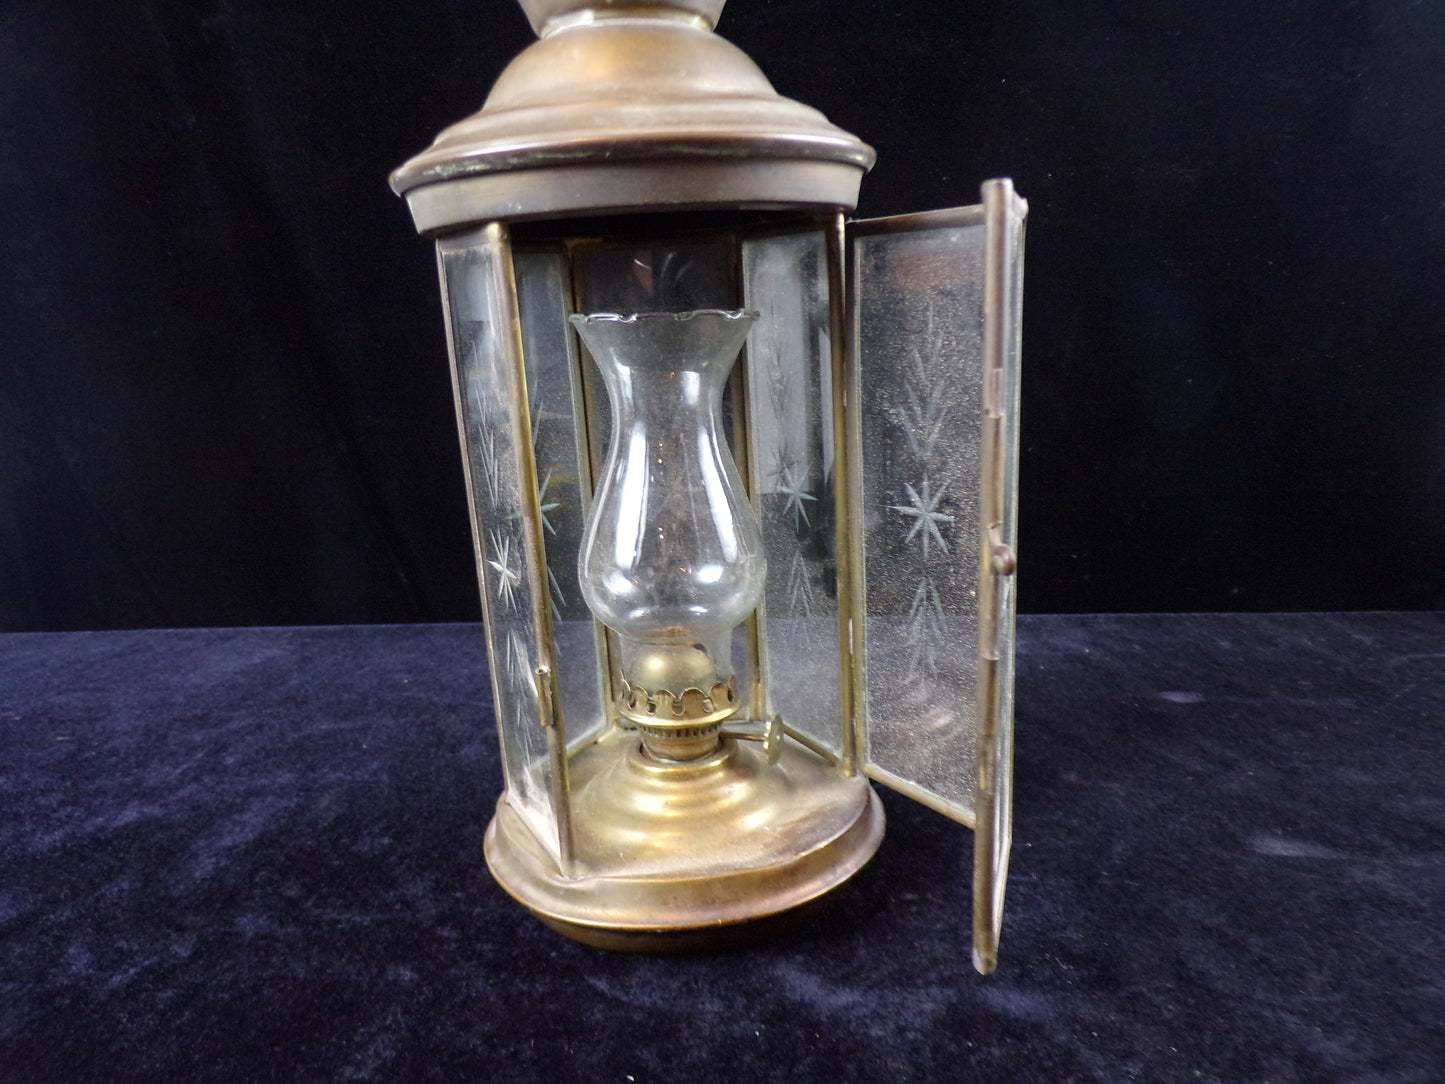 Lantern, Oil, Glass Chimney, Engraved Glass